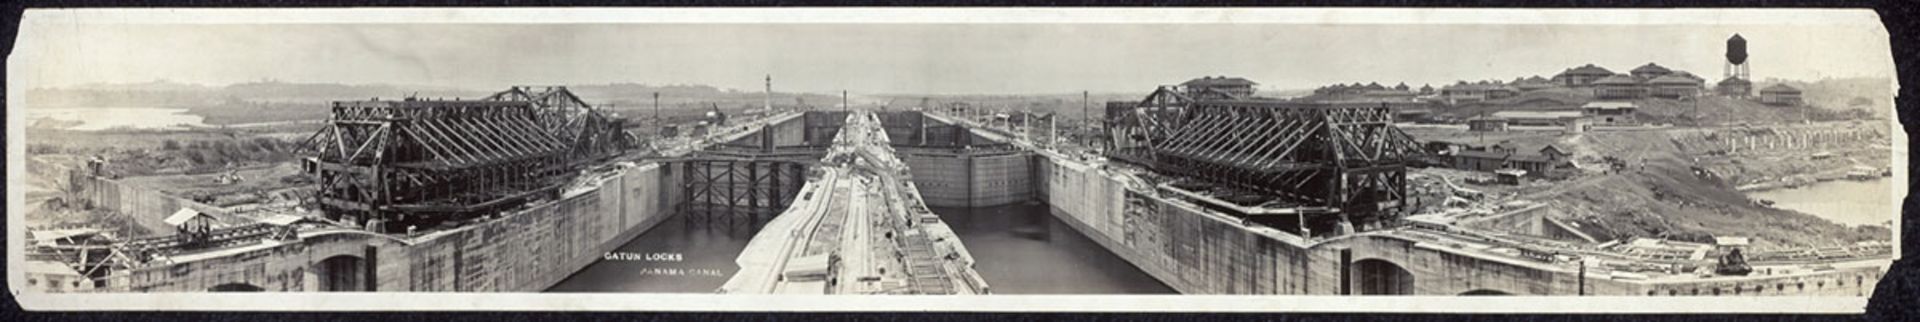 تصویر قدیمی مراحل ساخت سد سلولی کانال پاناما / Panama Canal